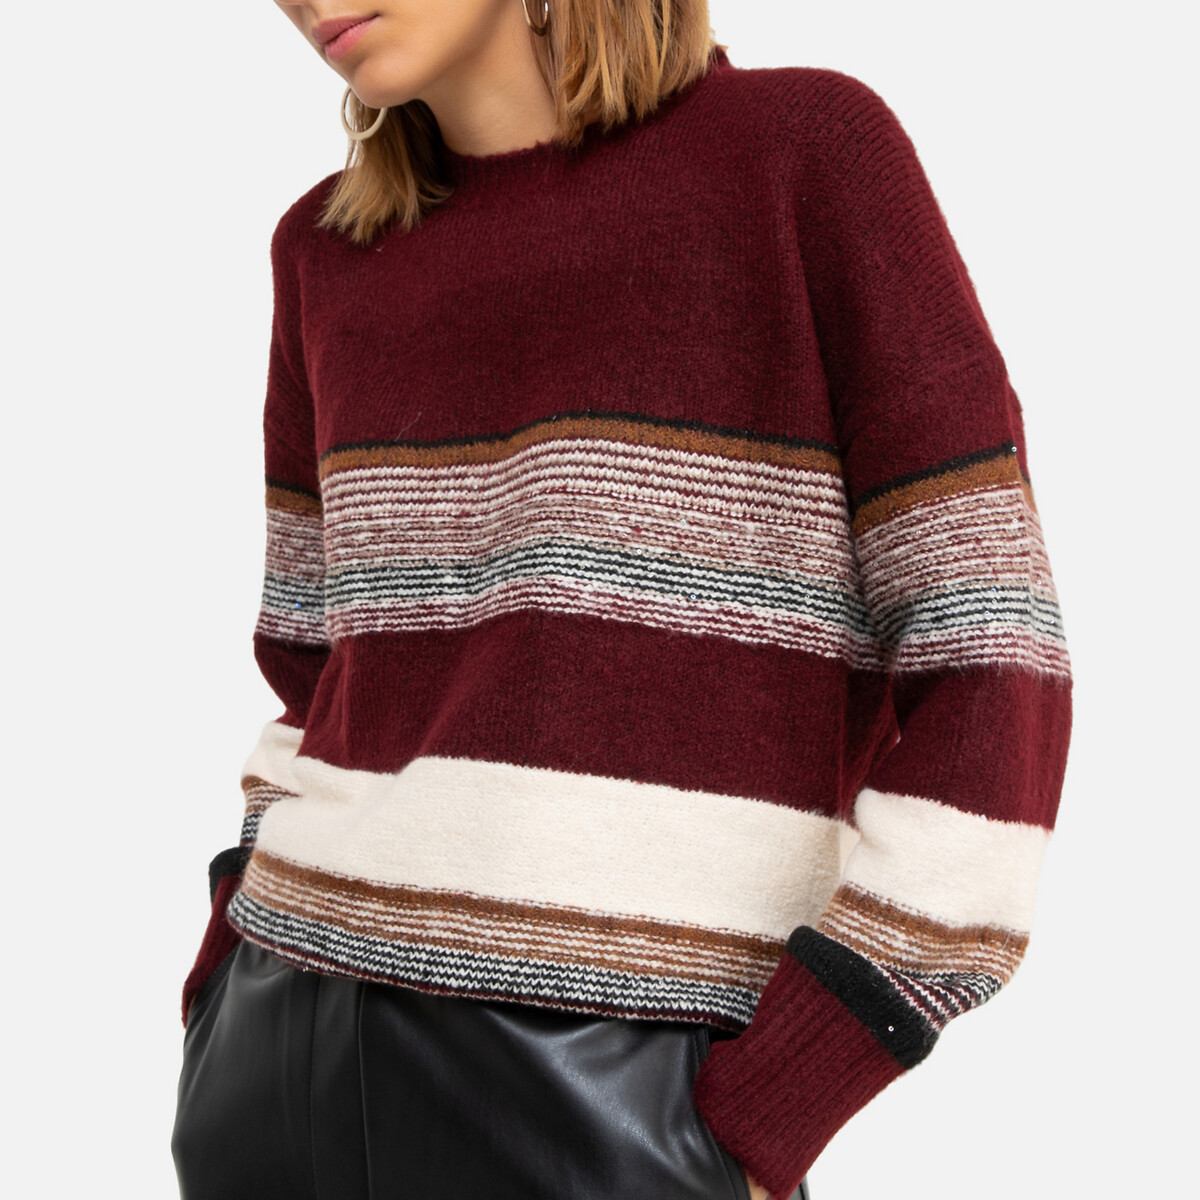 Пуловер La Redoute В полоску из плотного трикотажа M/L красный, размер M/L В полоску из плотного трикотажа M/L красный - фото 1